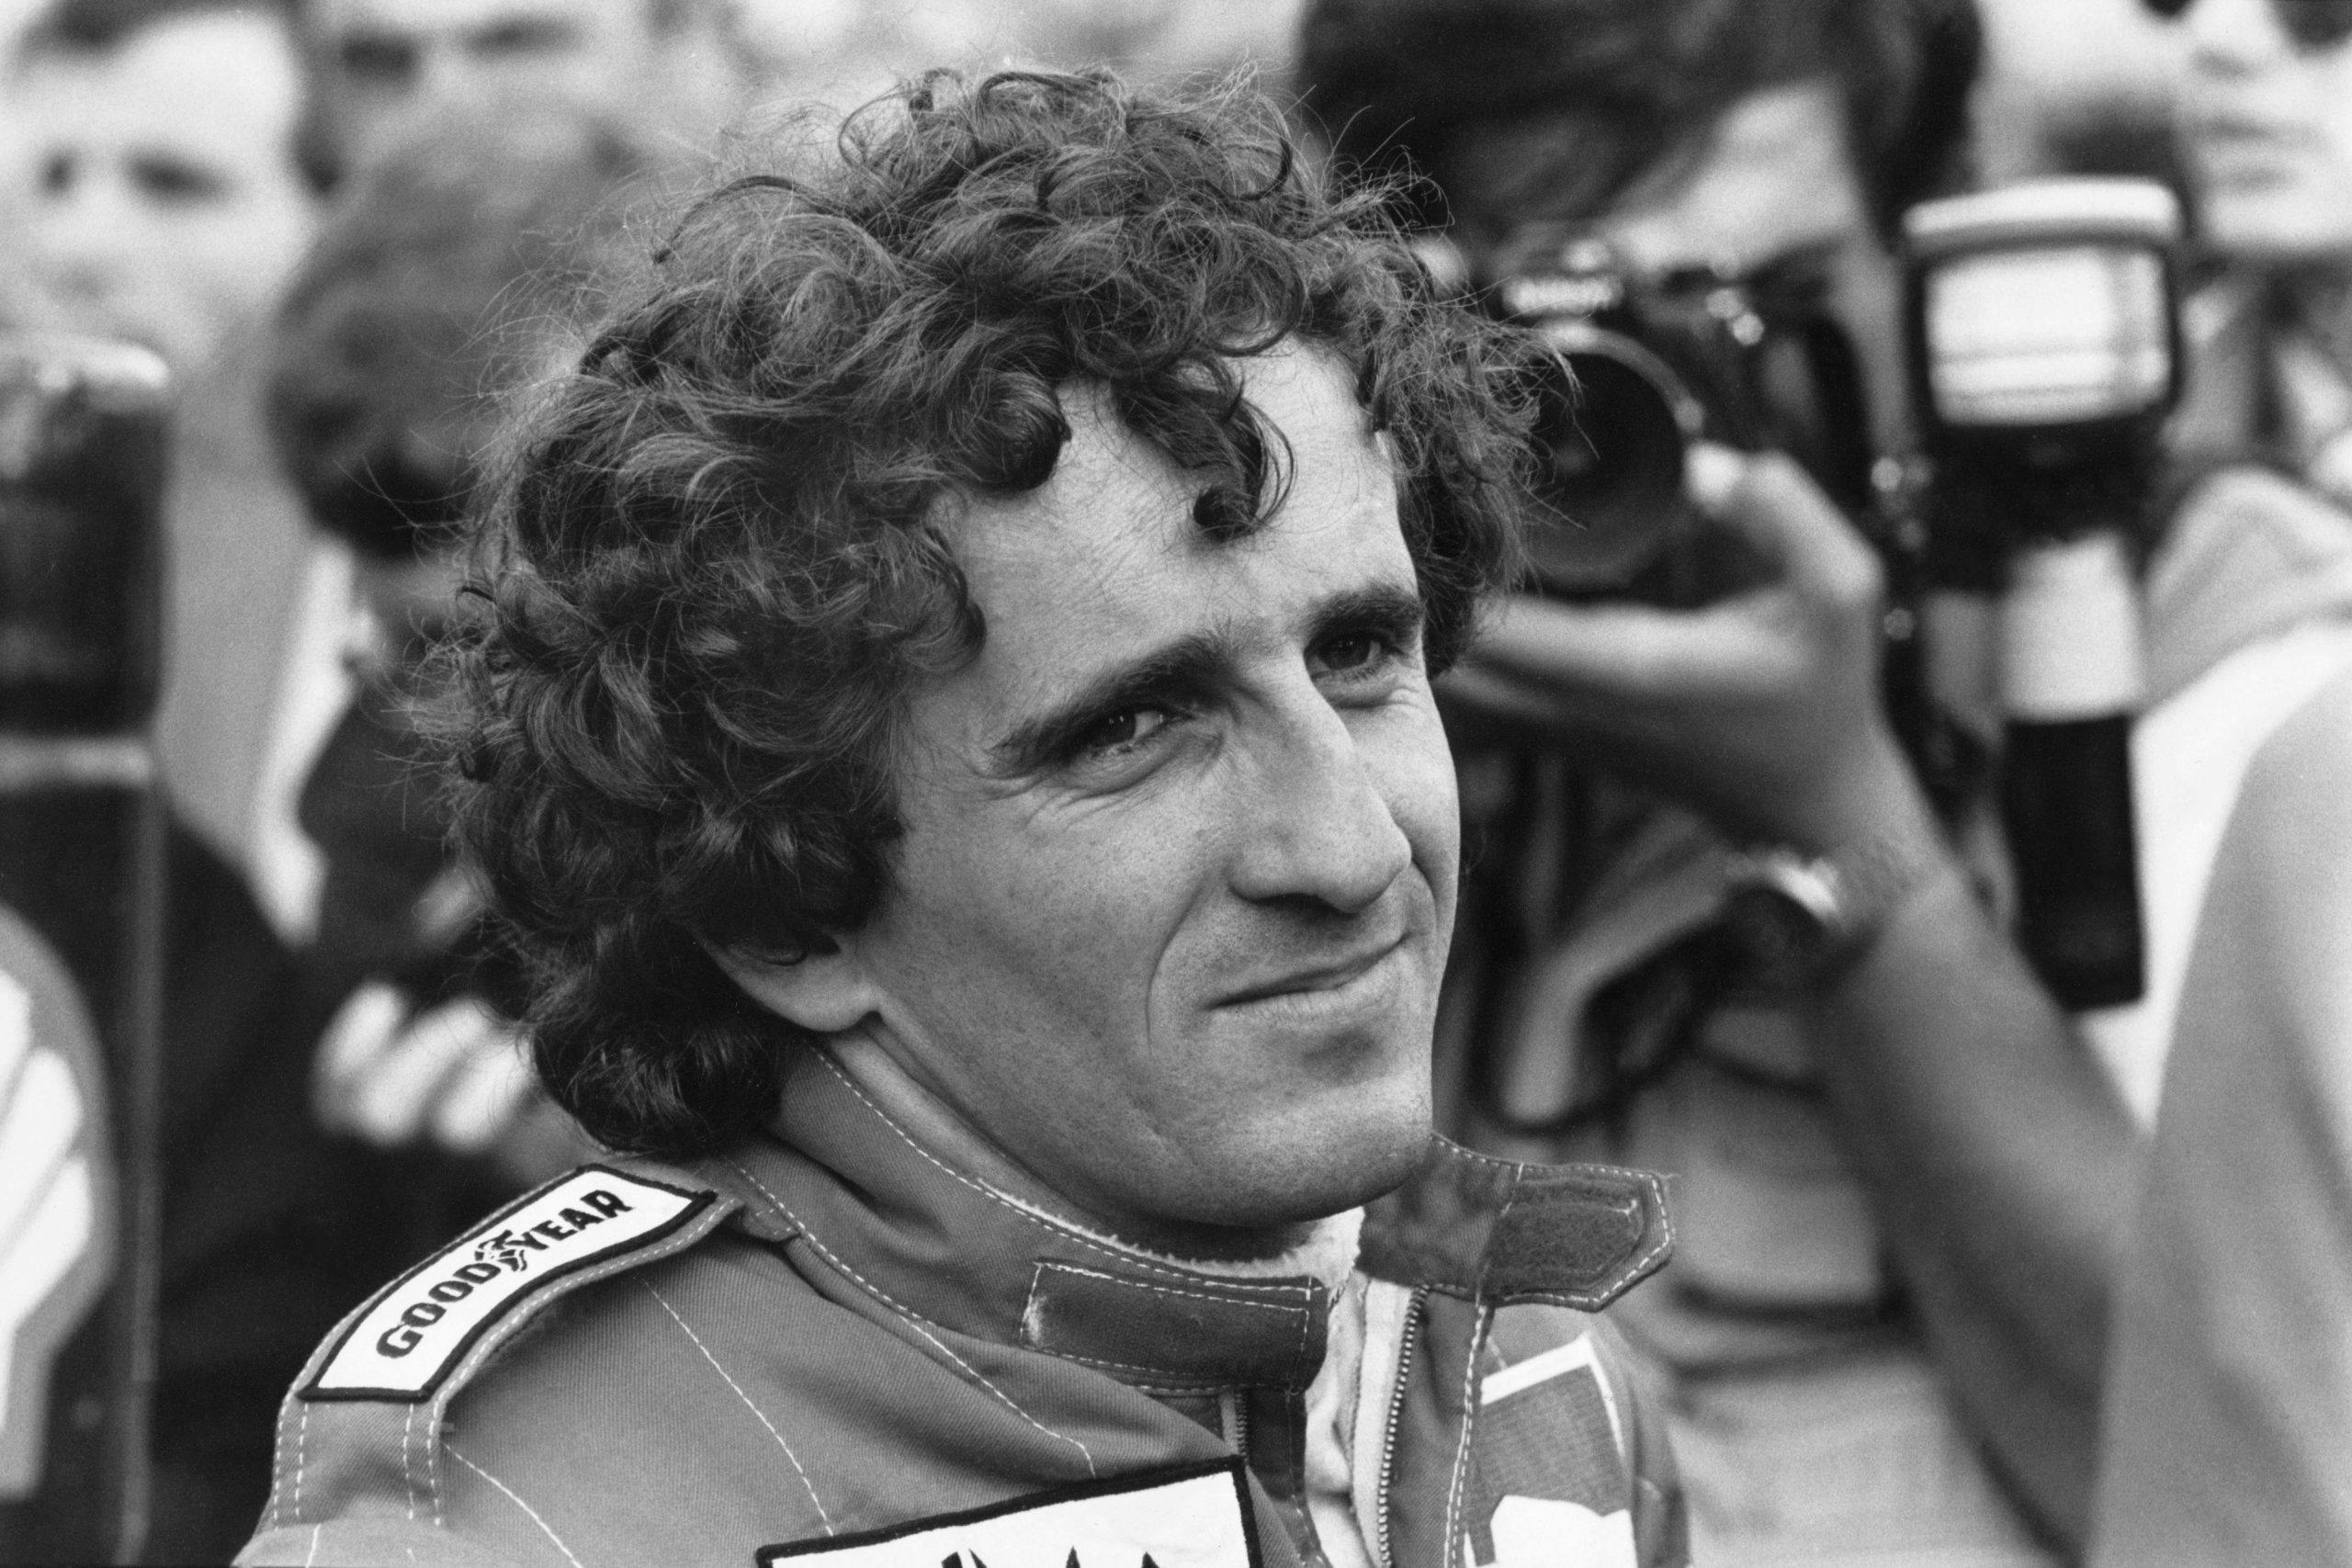 Formula One Grand Prix Driver Alain Prost